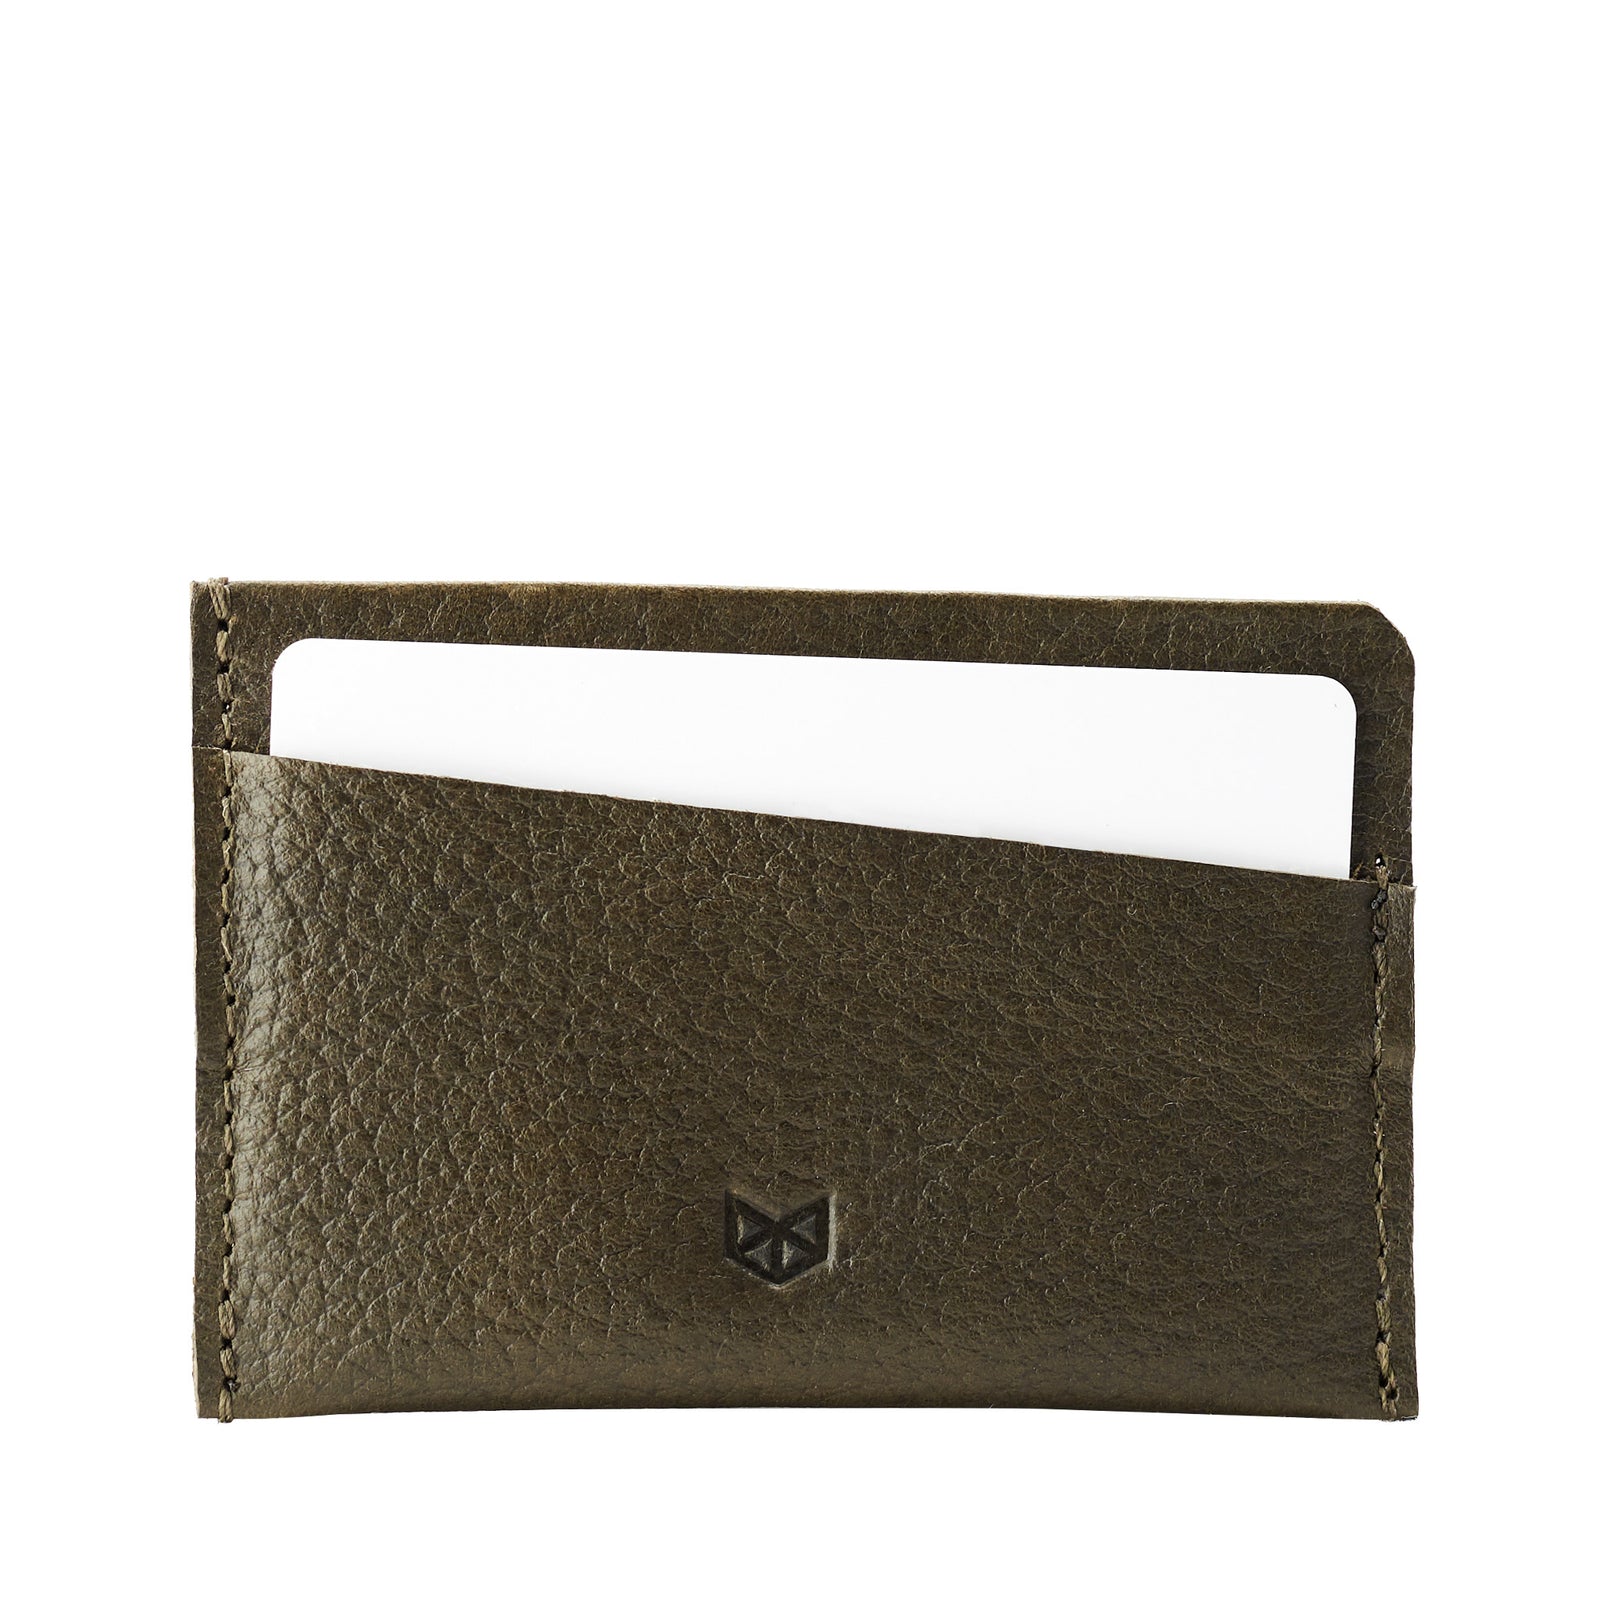 Slim green leather card holder. Gifts for men, handmade accessories, minimalist designer cards wallet